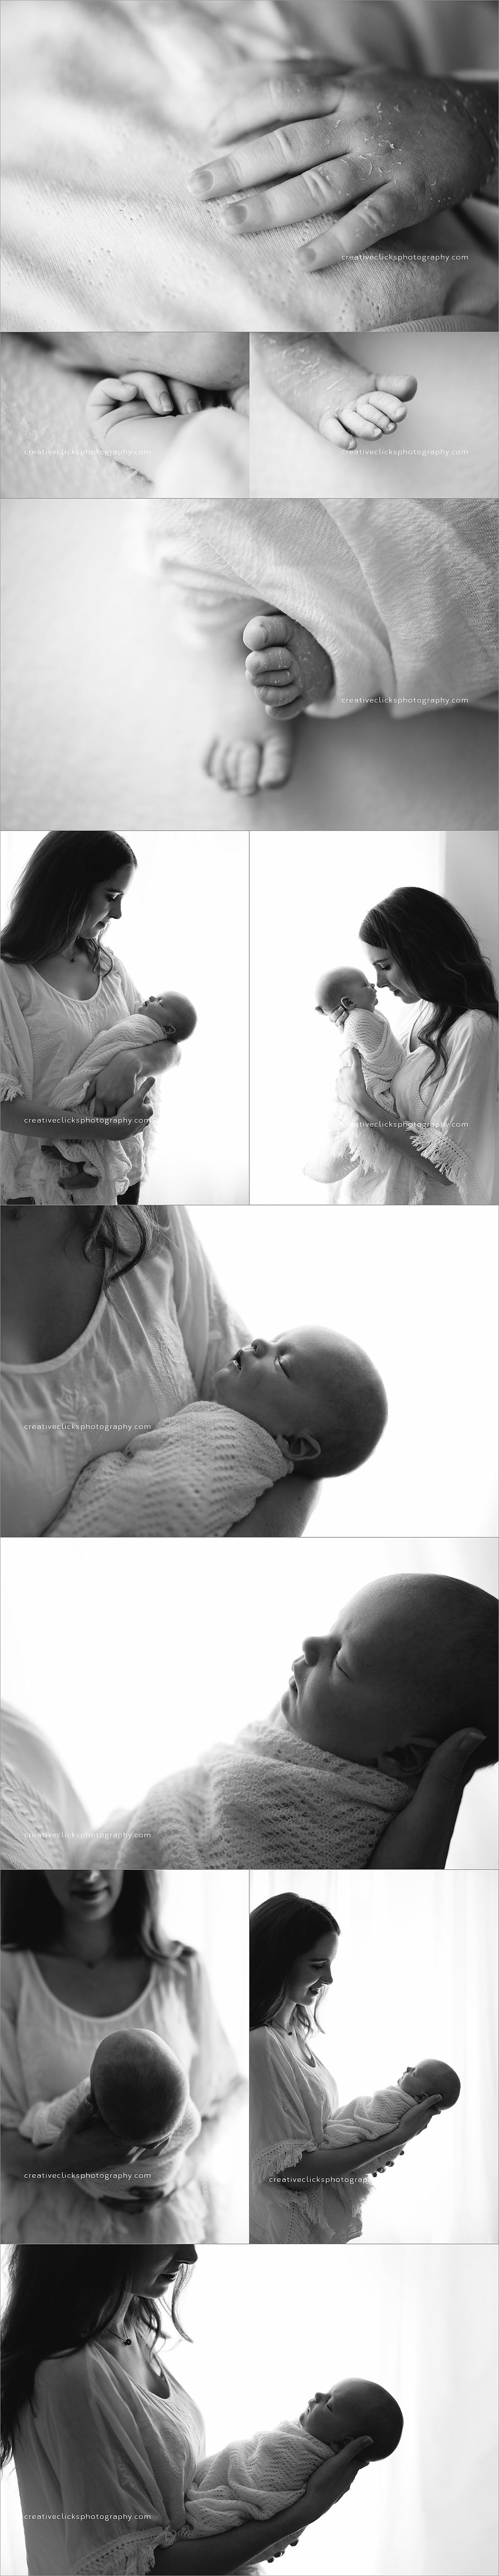 everly-niagara-organic-newborn-baby-photography